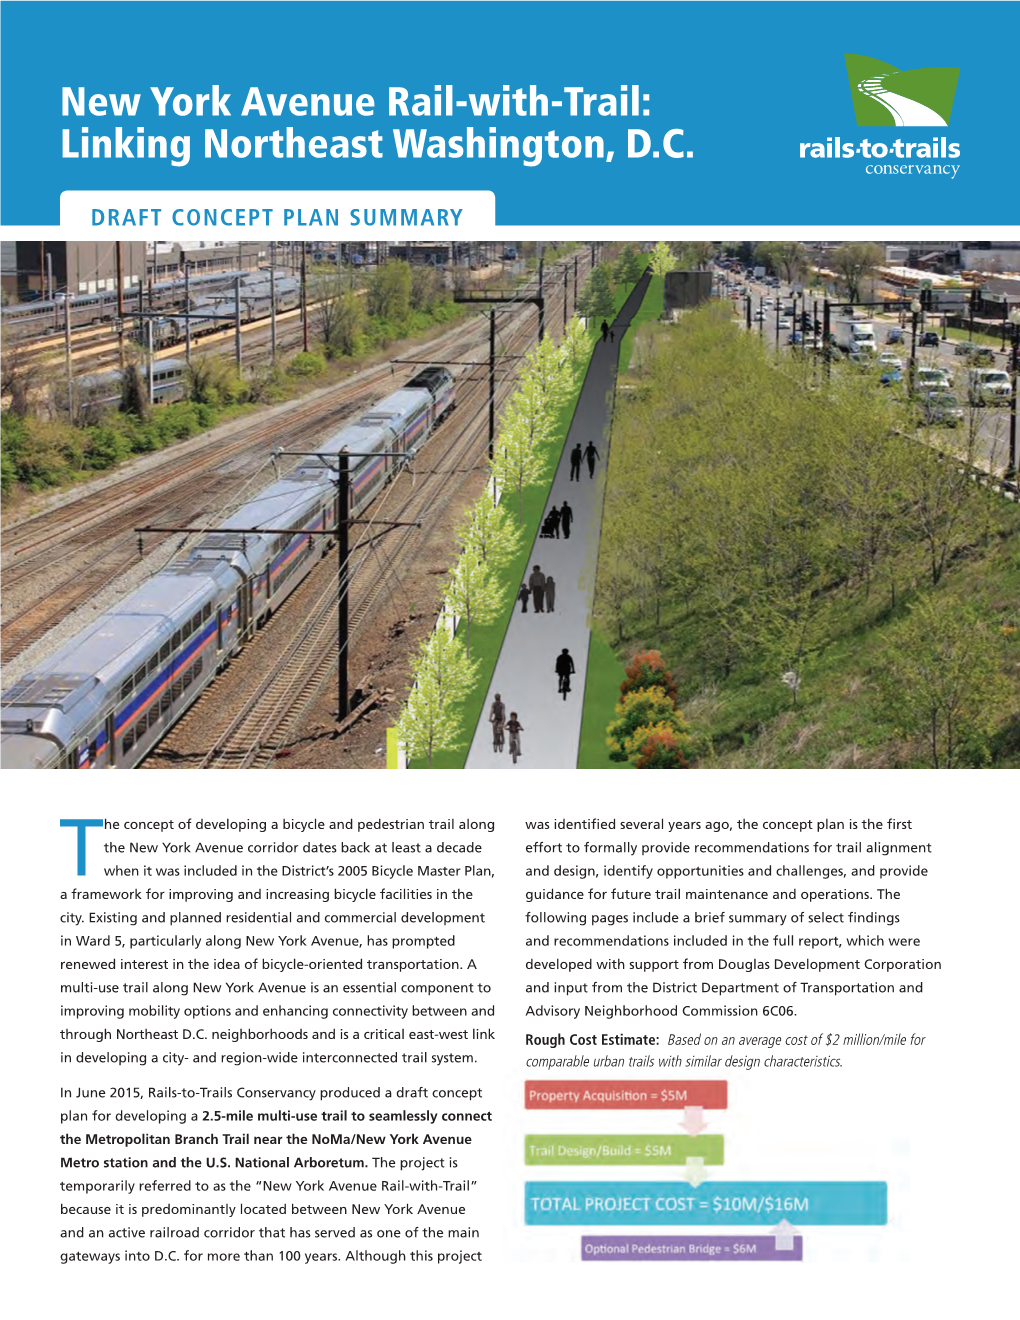 New York Avenue Rail-With-Trail: Linking Northeast Washington, D.C